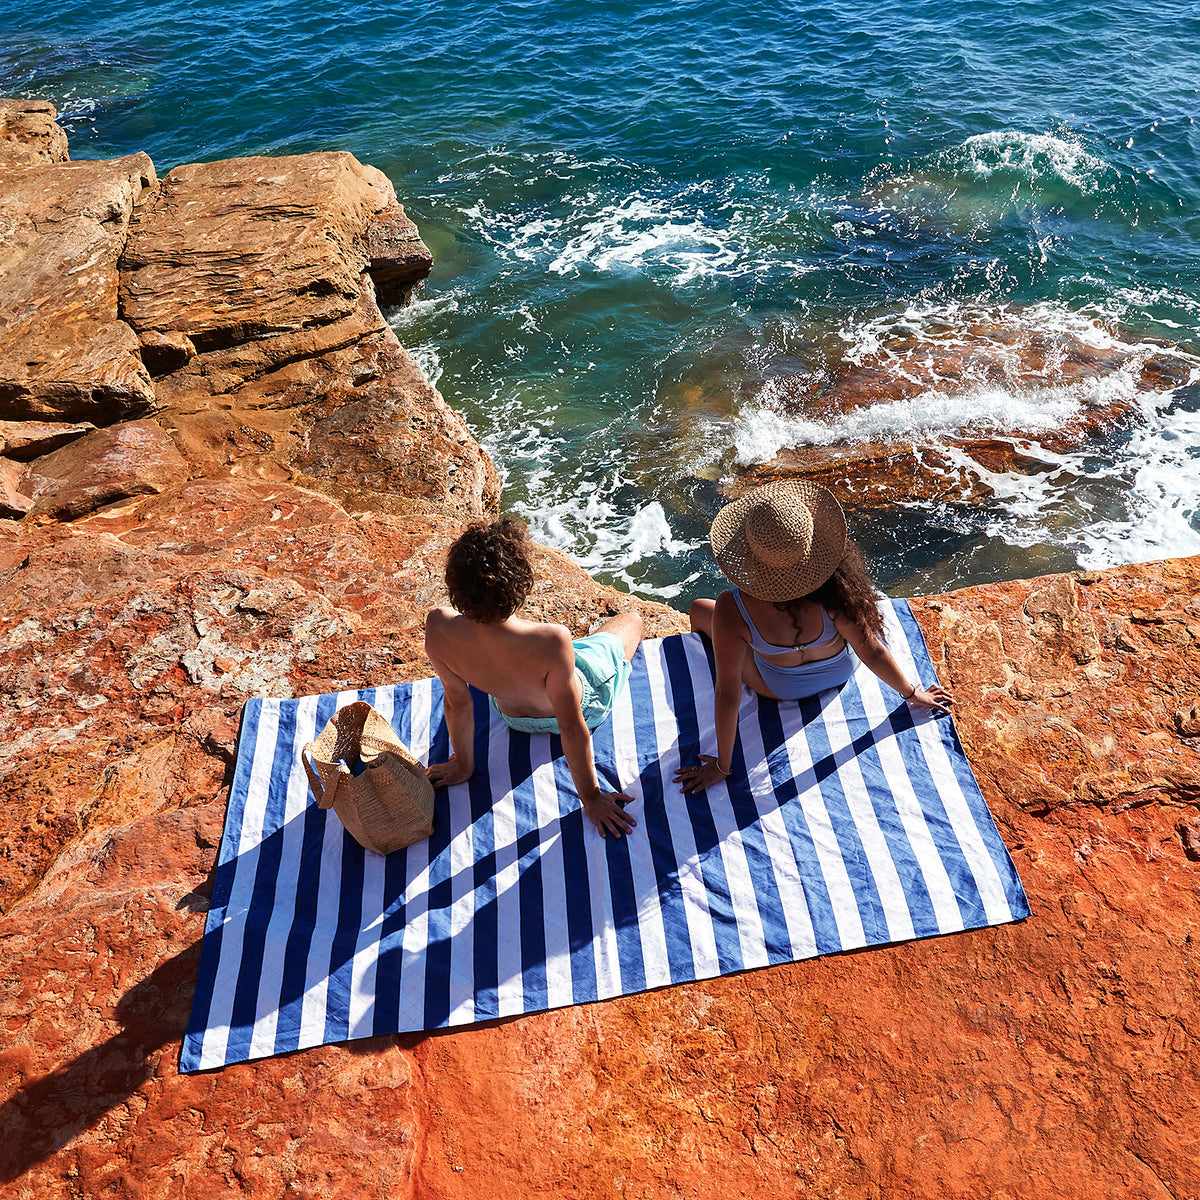 Picnic Blanket - Whitsunday Blue - Dock & Bay